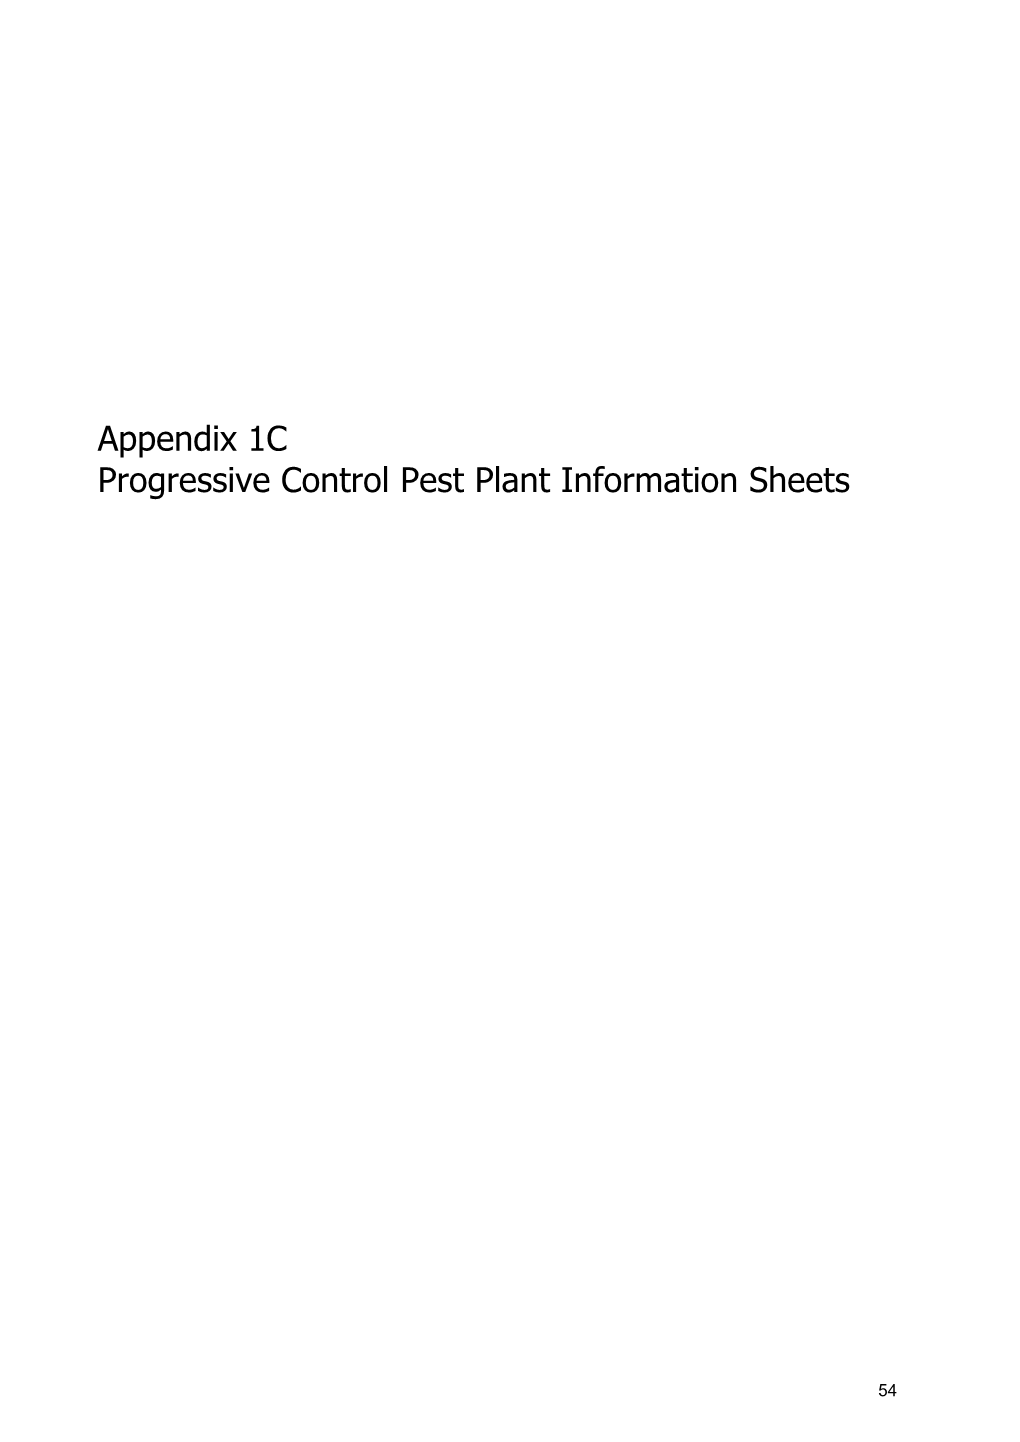 Appendix 1C Progressive Control Pest Plant Information Sheets